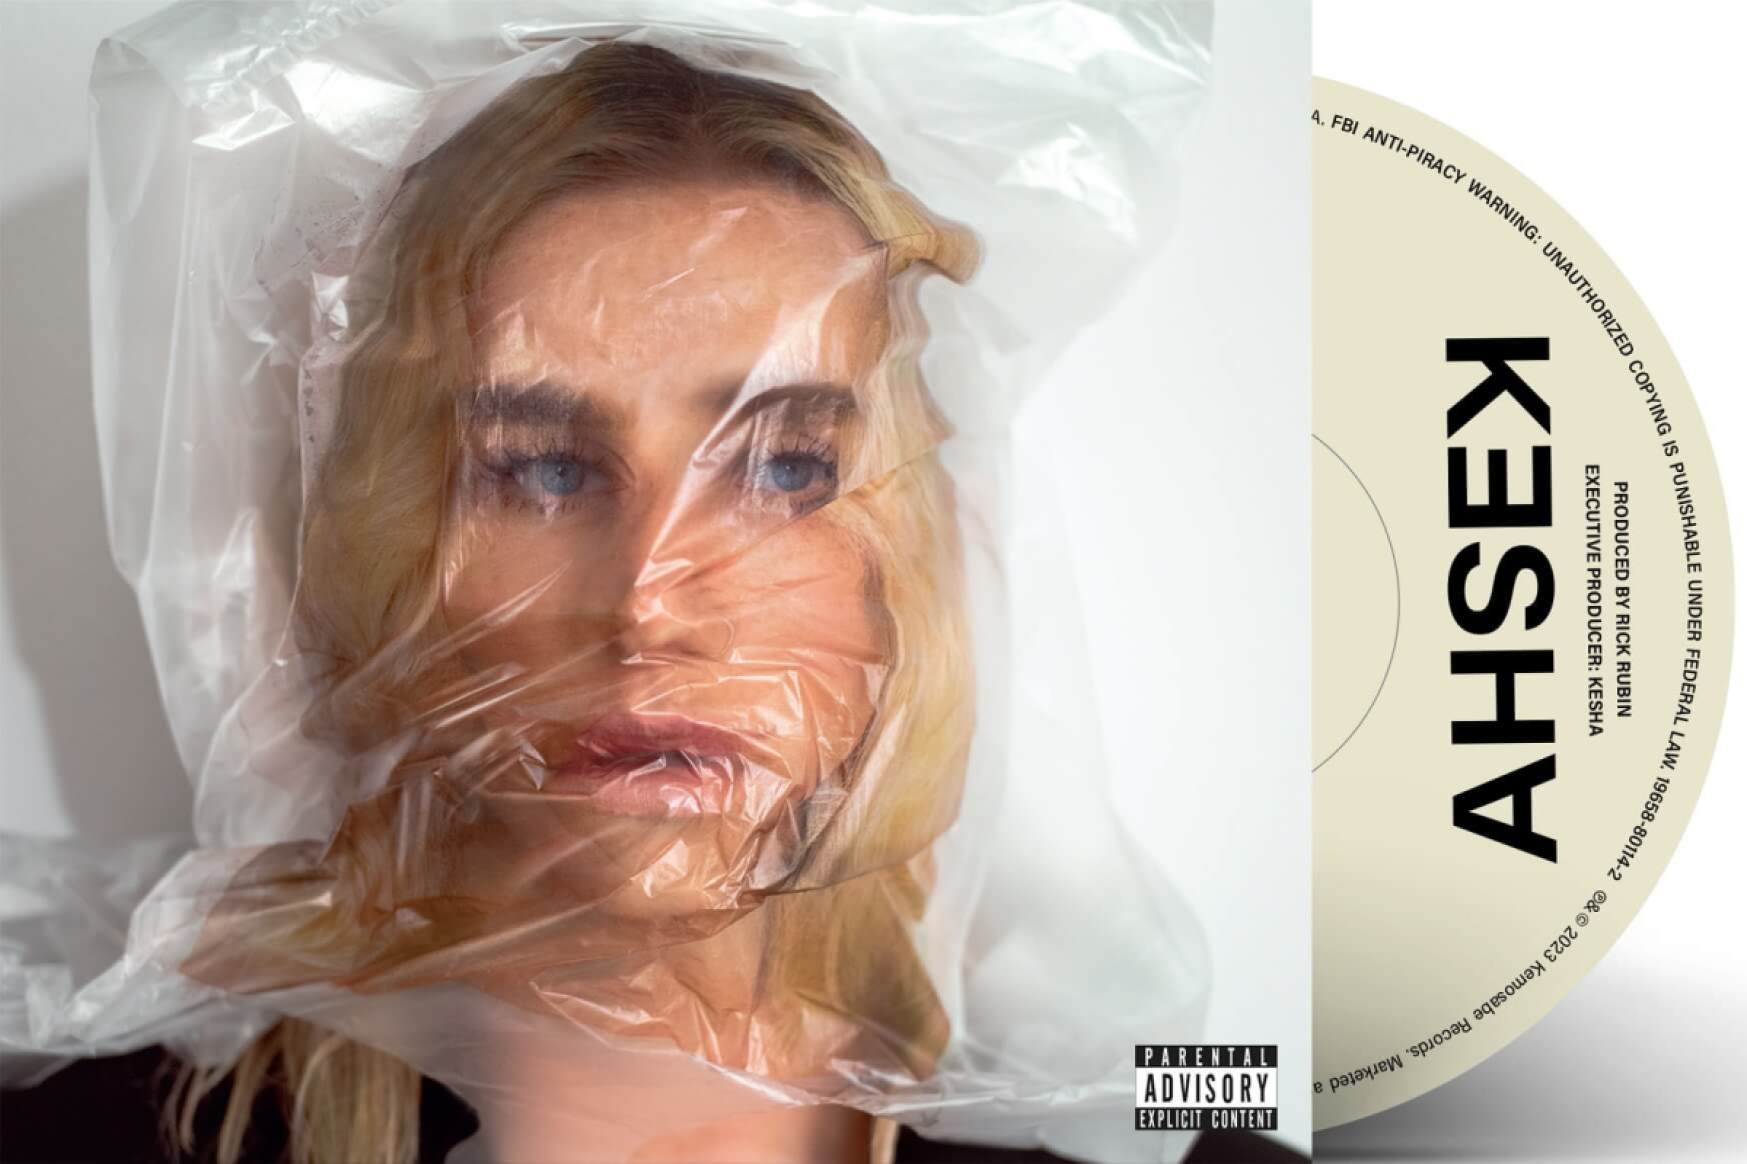 The album art and CD text of Kesha's 'Gag Order'